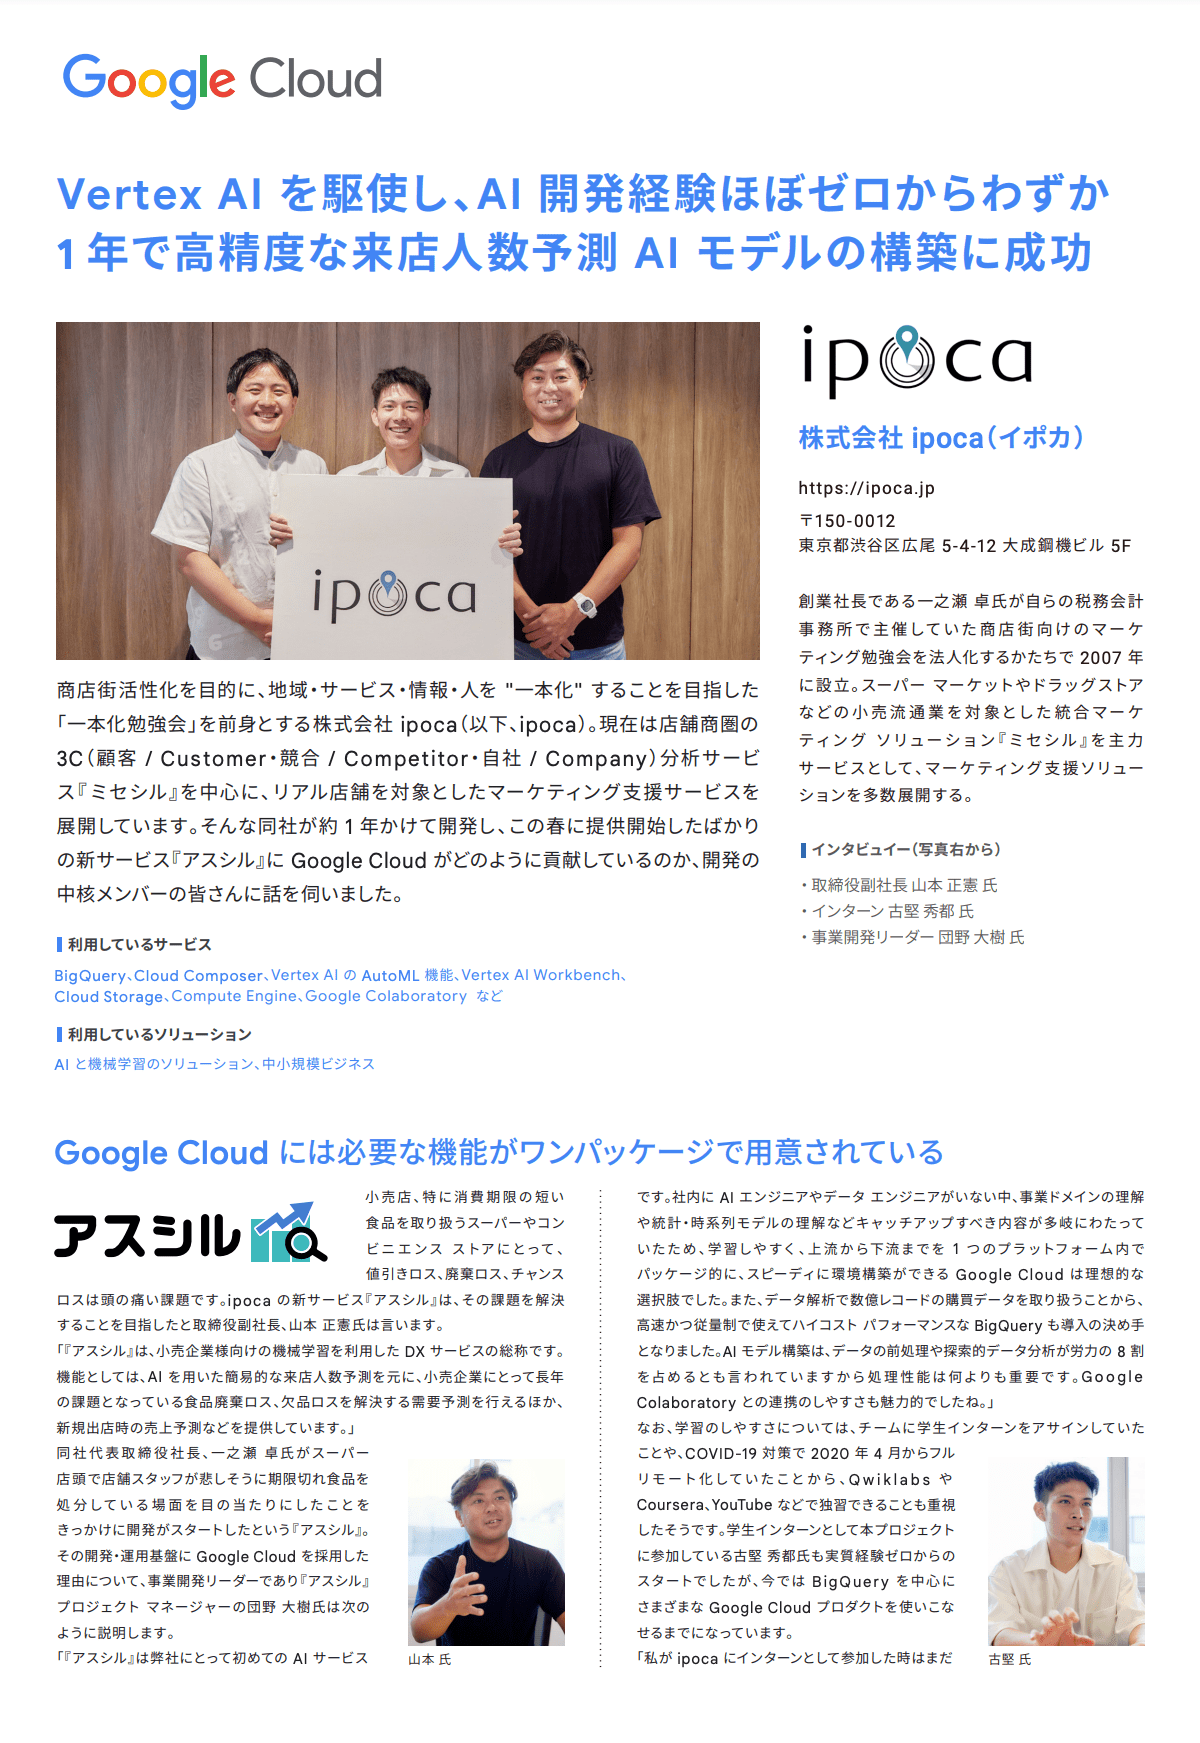 Google Cloud Japan Blog に「Vertex AIを用いた需要予測の取り組み」事例がケーススタディとして掲載されました。